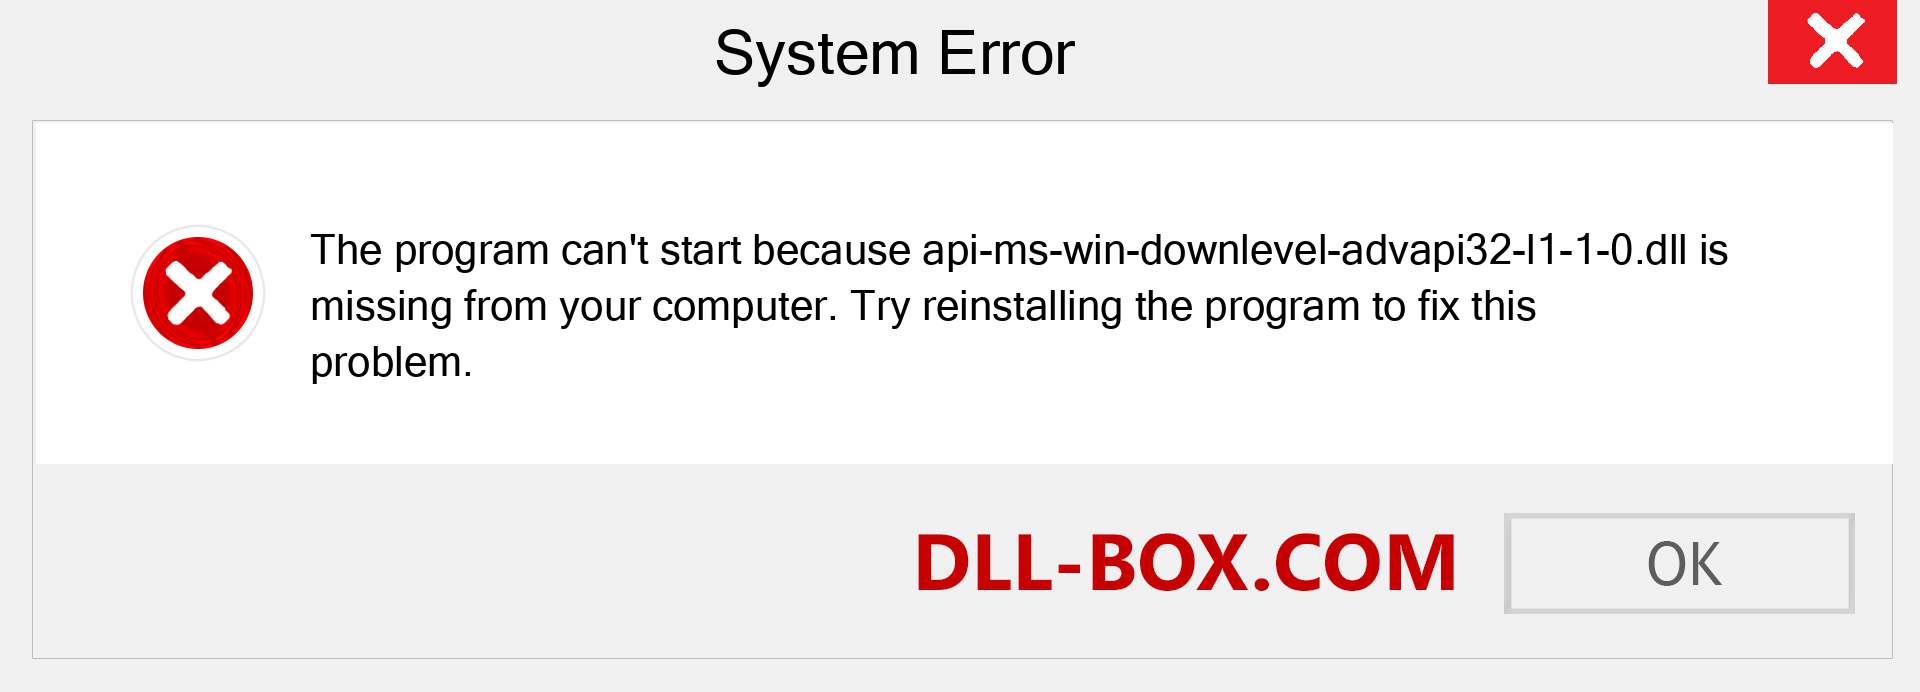  api-ms-win-downlevel-advapi32-l1-1-0.dll file is missing?. Download for Windows 7, 8, 10 - Fix  api-ms-win-downlevel-advapi32-l1-1-0 dll Missing Error on Windows, photos, images